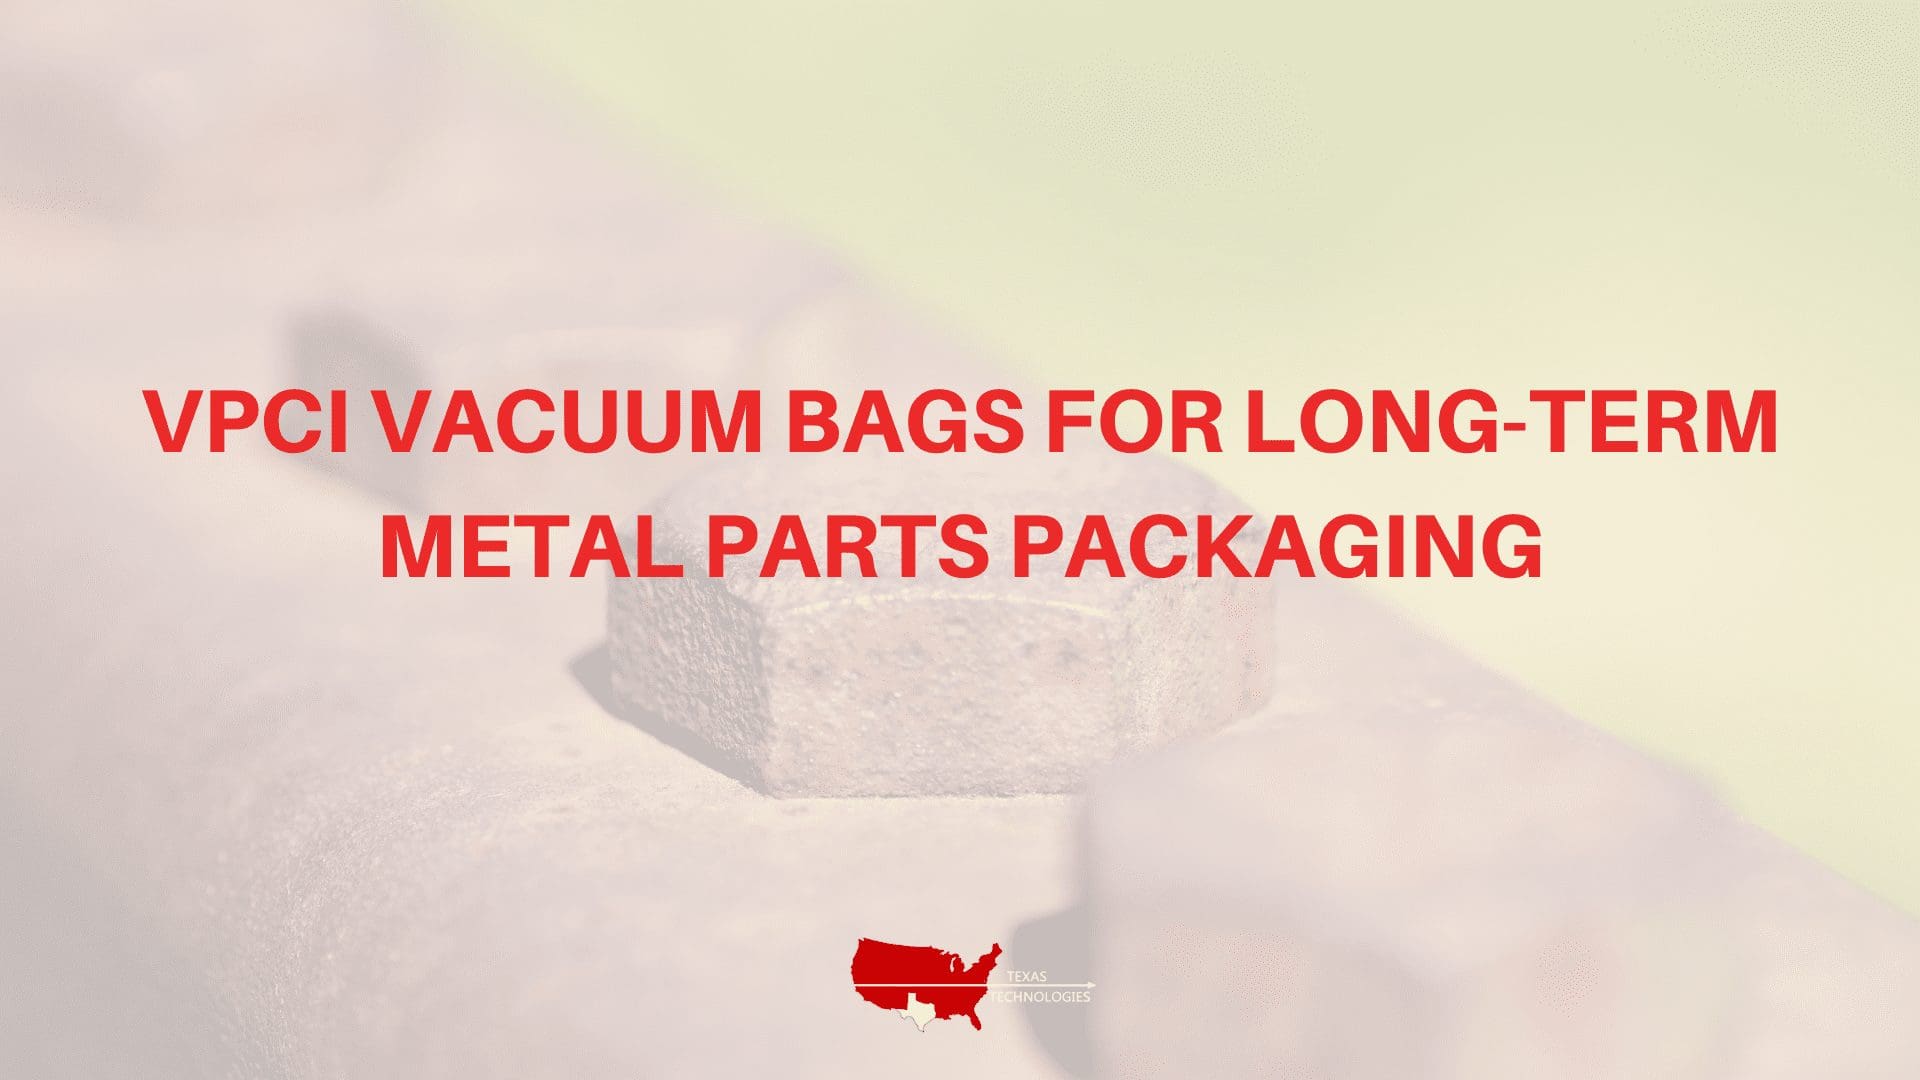 VpCI Vacuum Bags for Long-Term Metal Parts Packaging